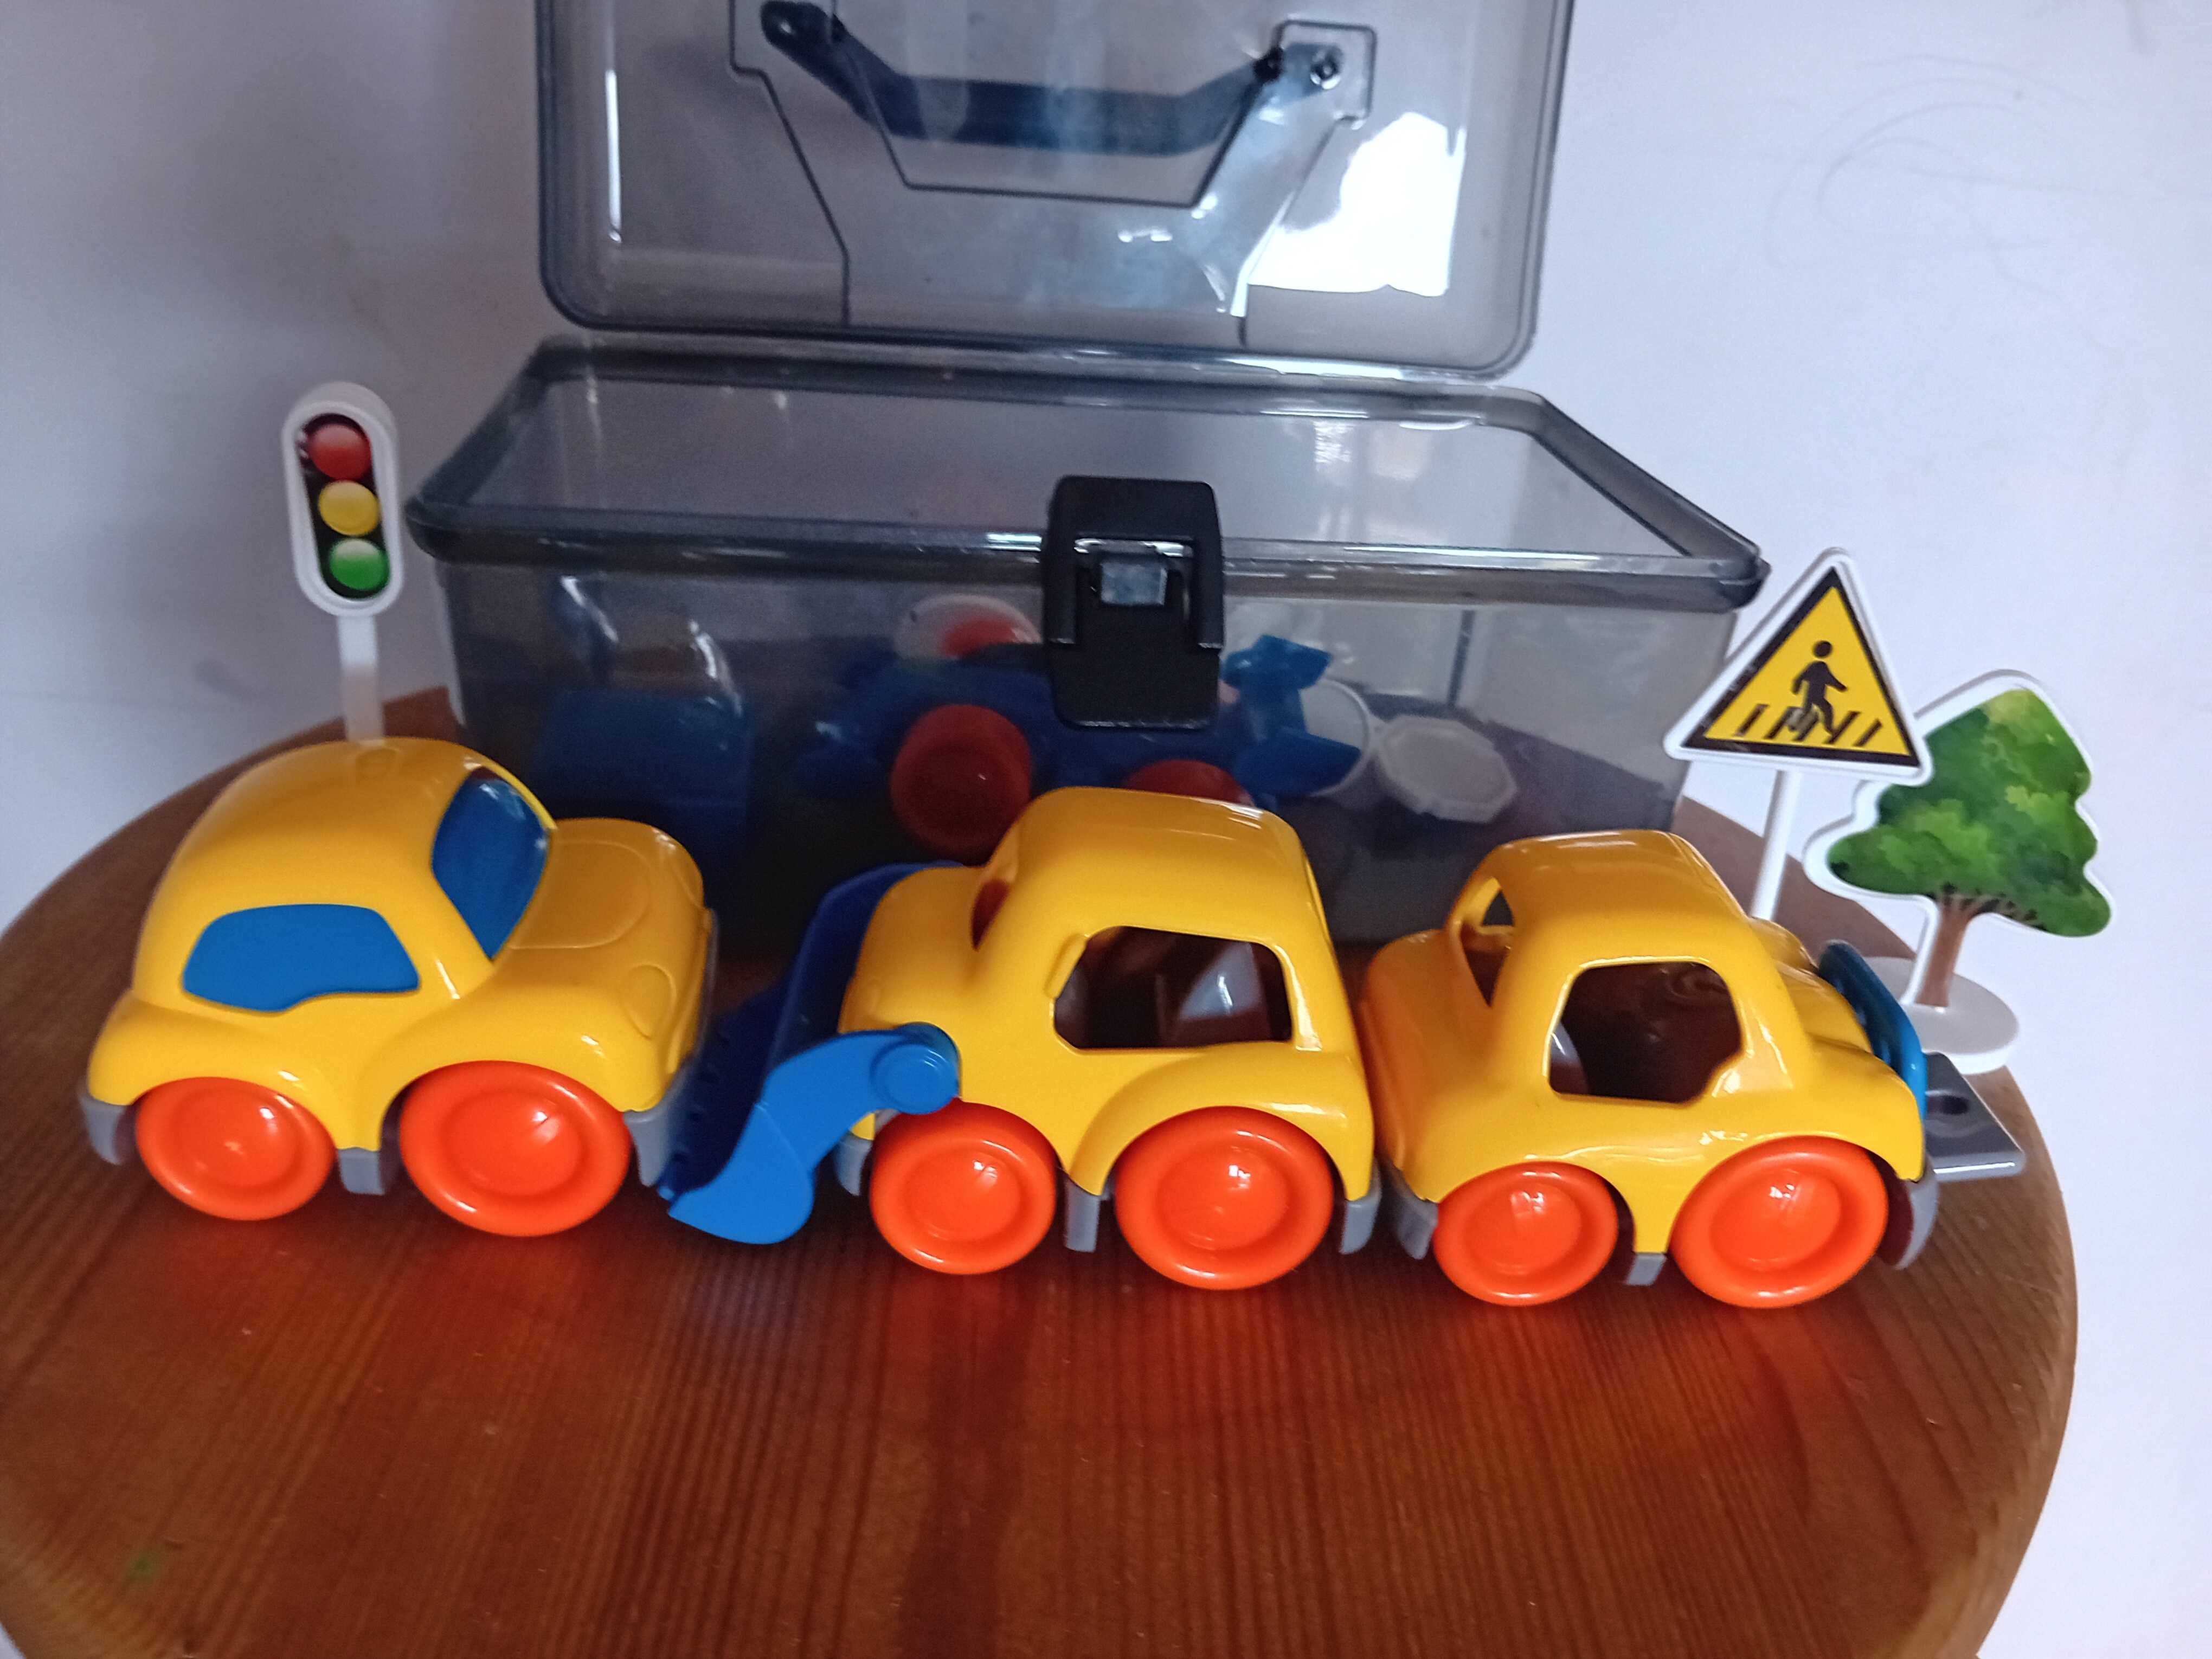 Zabawki samochodziki